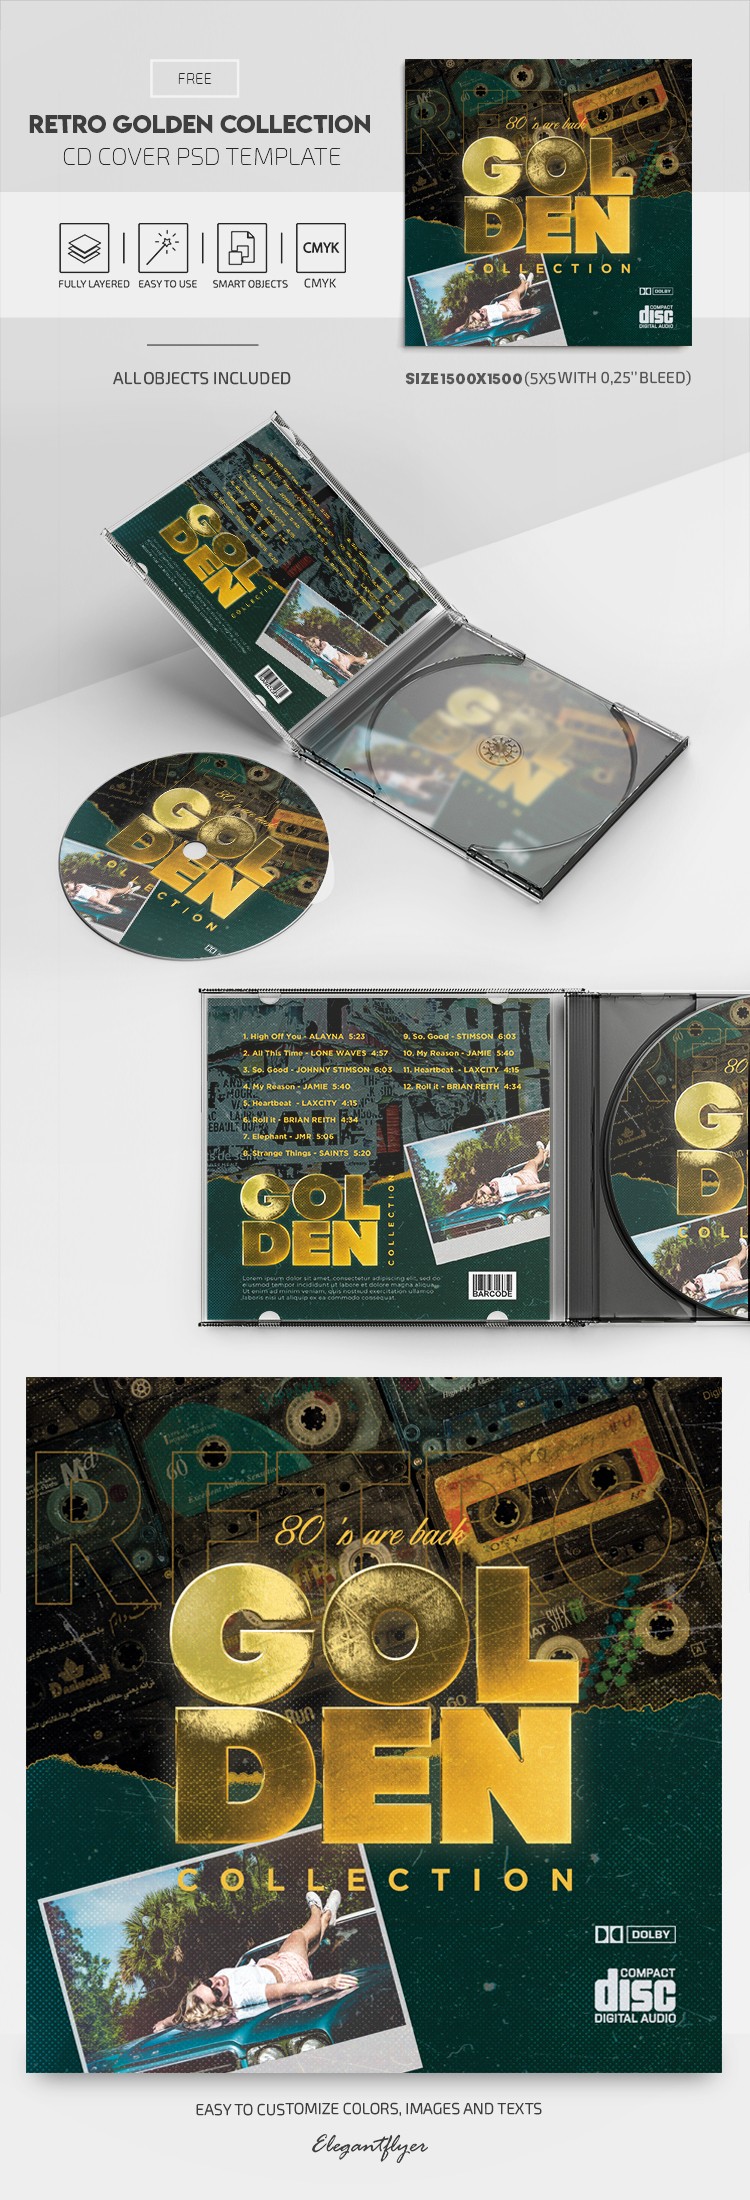 Retro Golden Collection CD Cover by ElegantFlyer